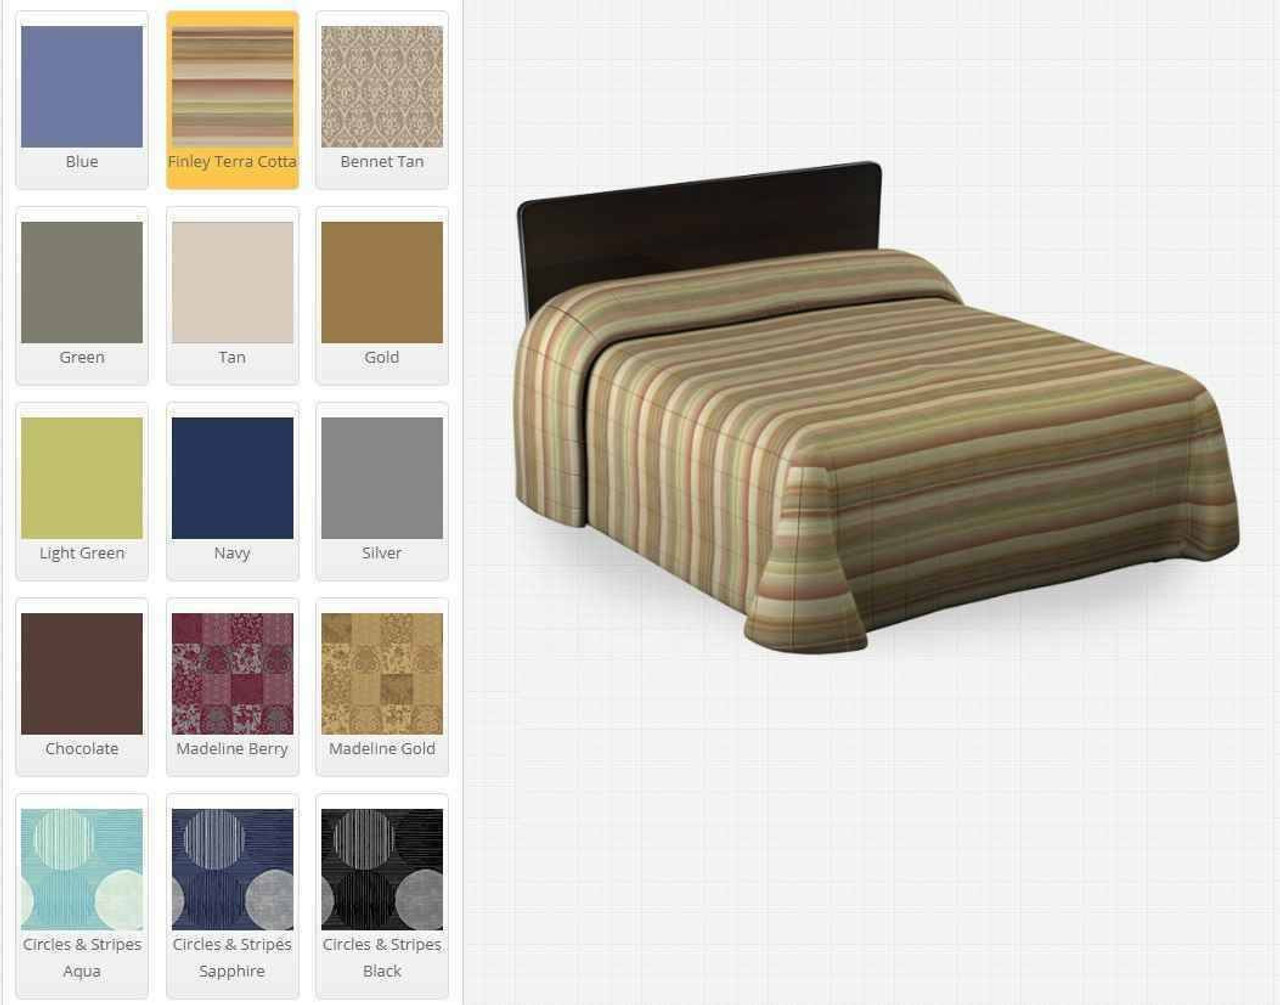 Martex RX Bedding by Westpoint Hospitality Martex Rx Bedding or Bedspread - All Styles